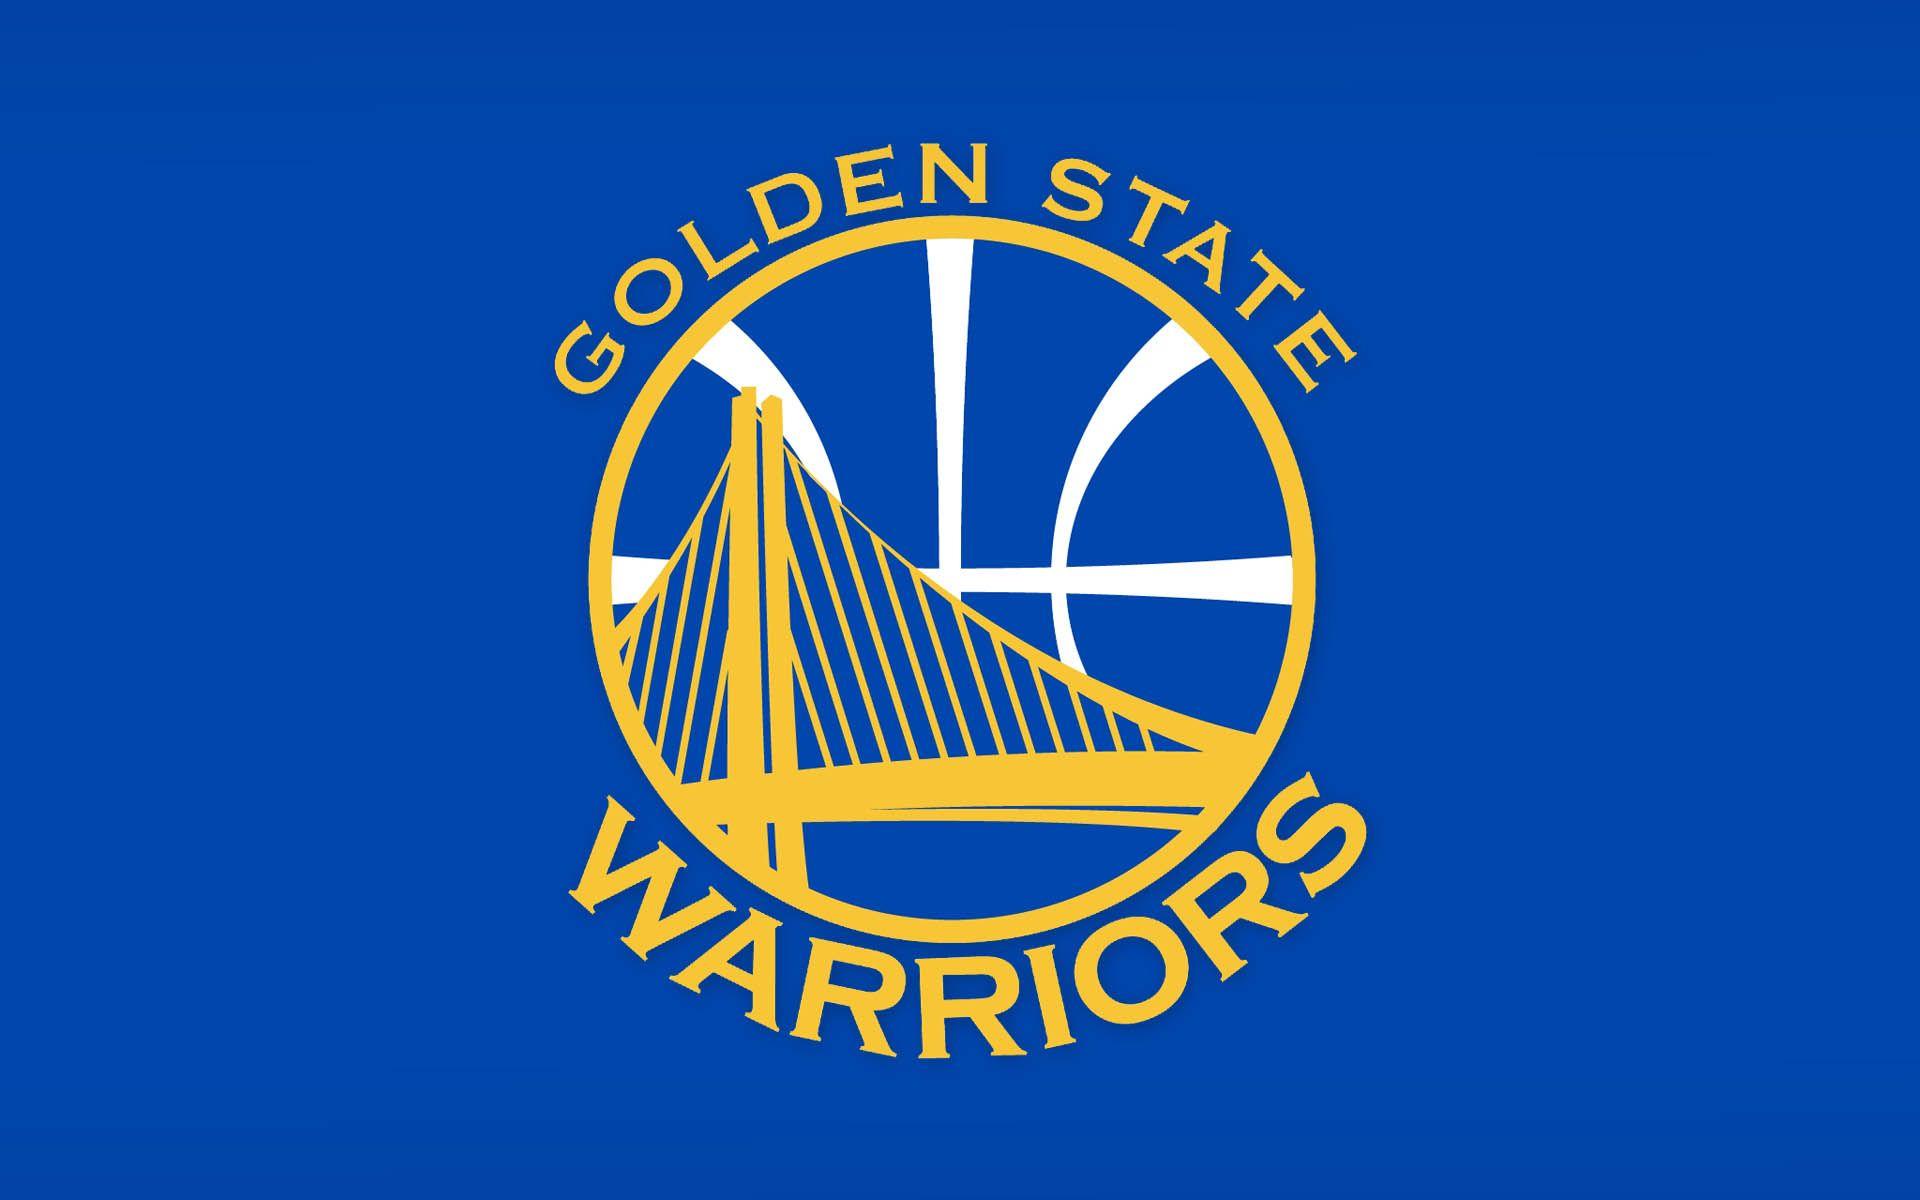 GSW Logo - Golden State Warriors Wallpapers HD | PixelsTalk.Net